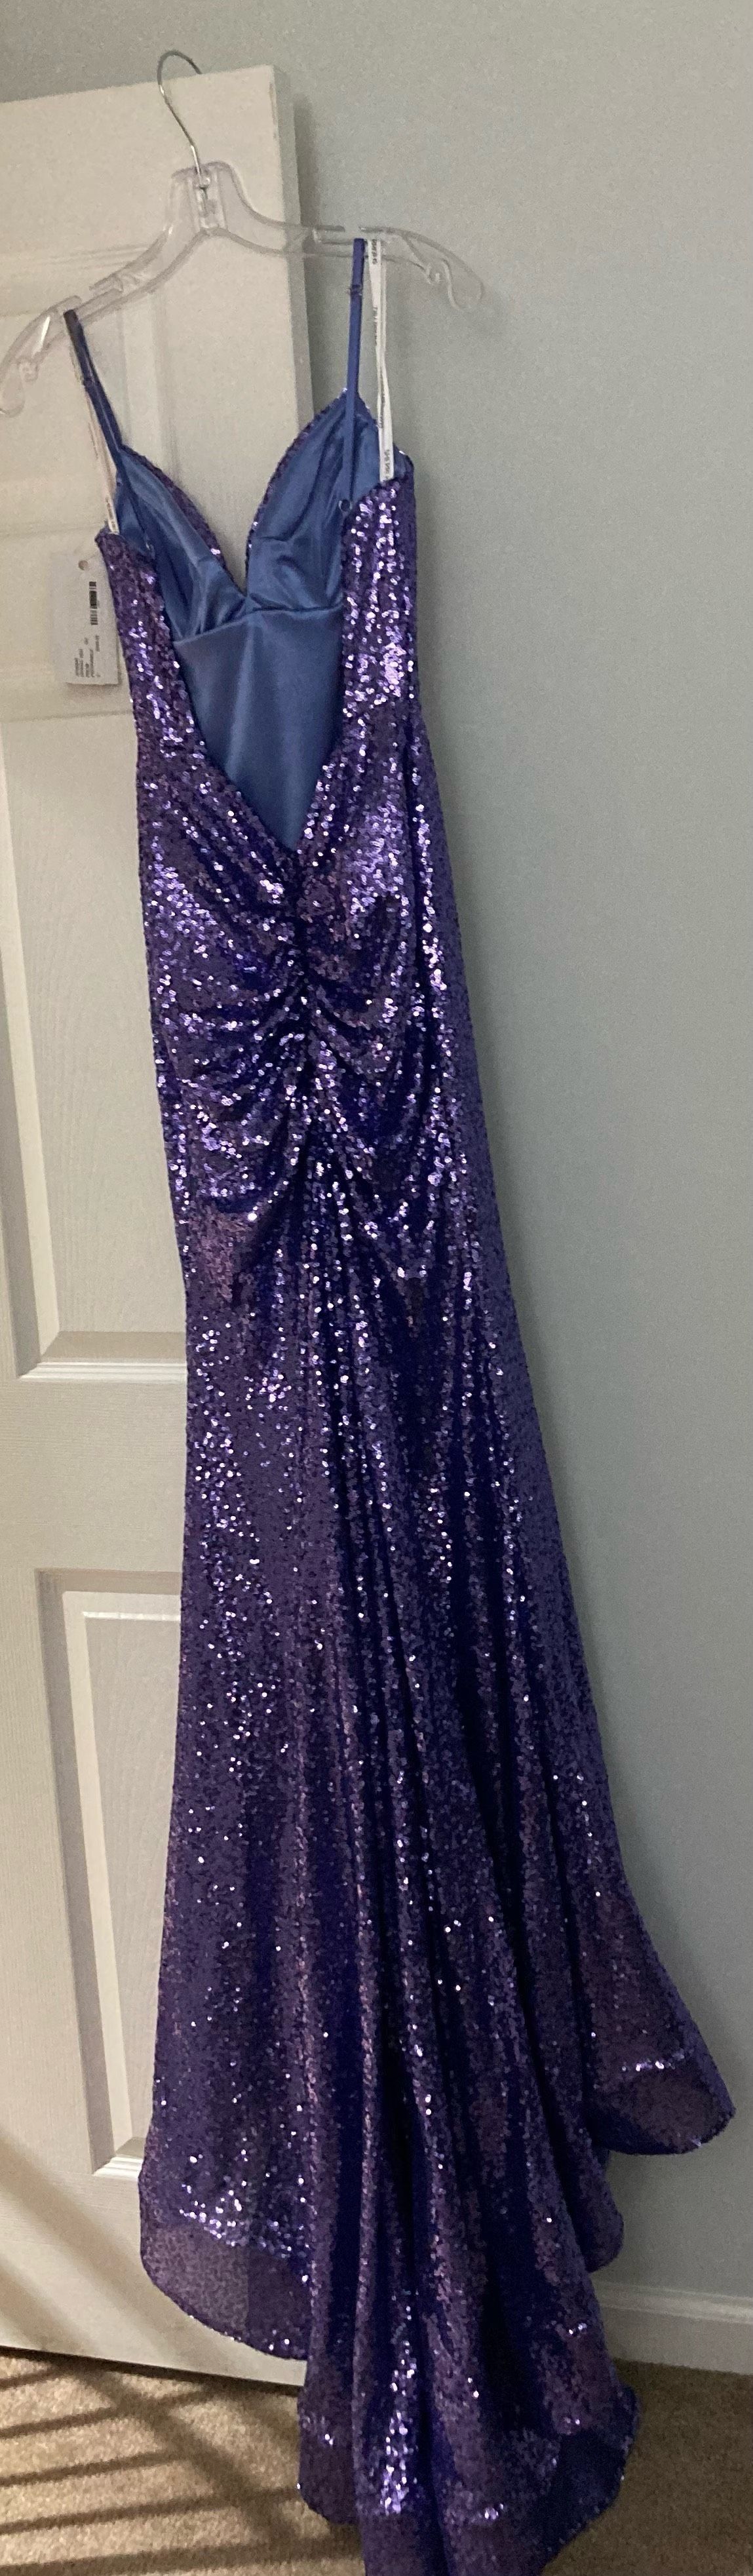 Sherri Hill Size 2 Prom Purple Mermaid Dress on Queenly